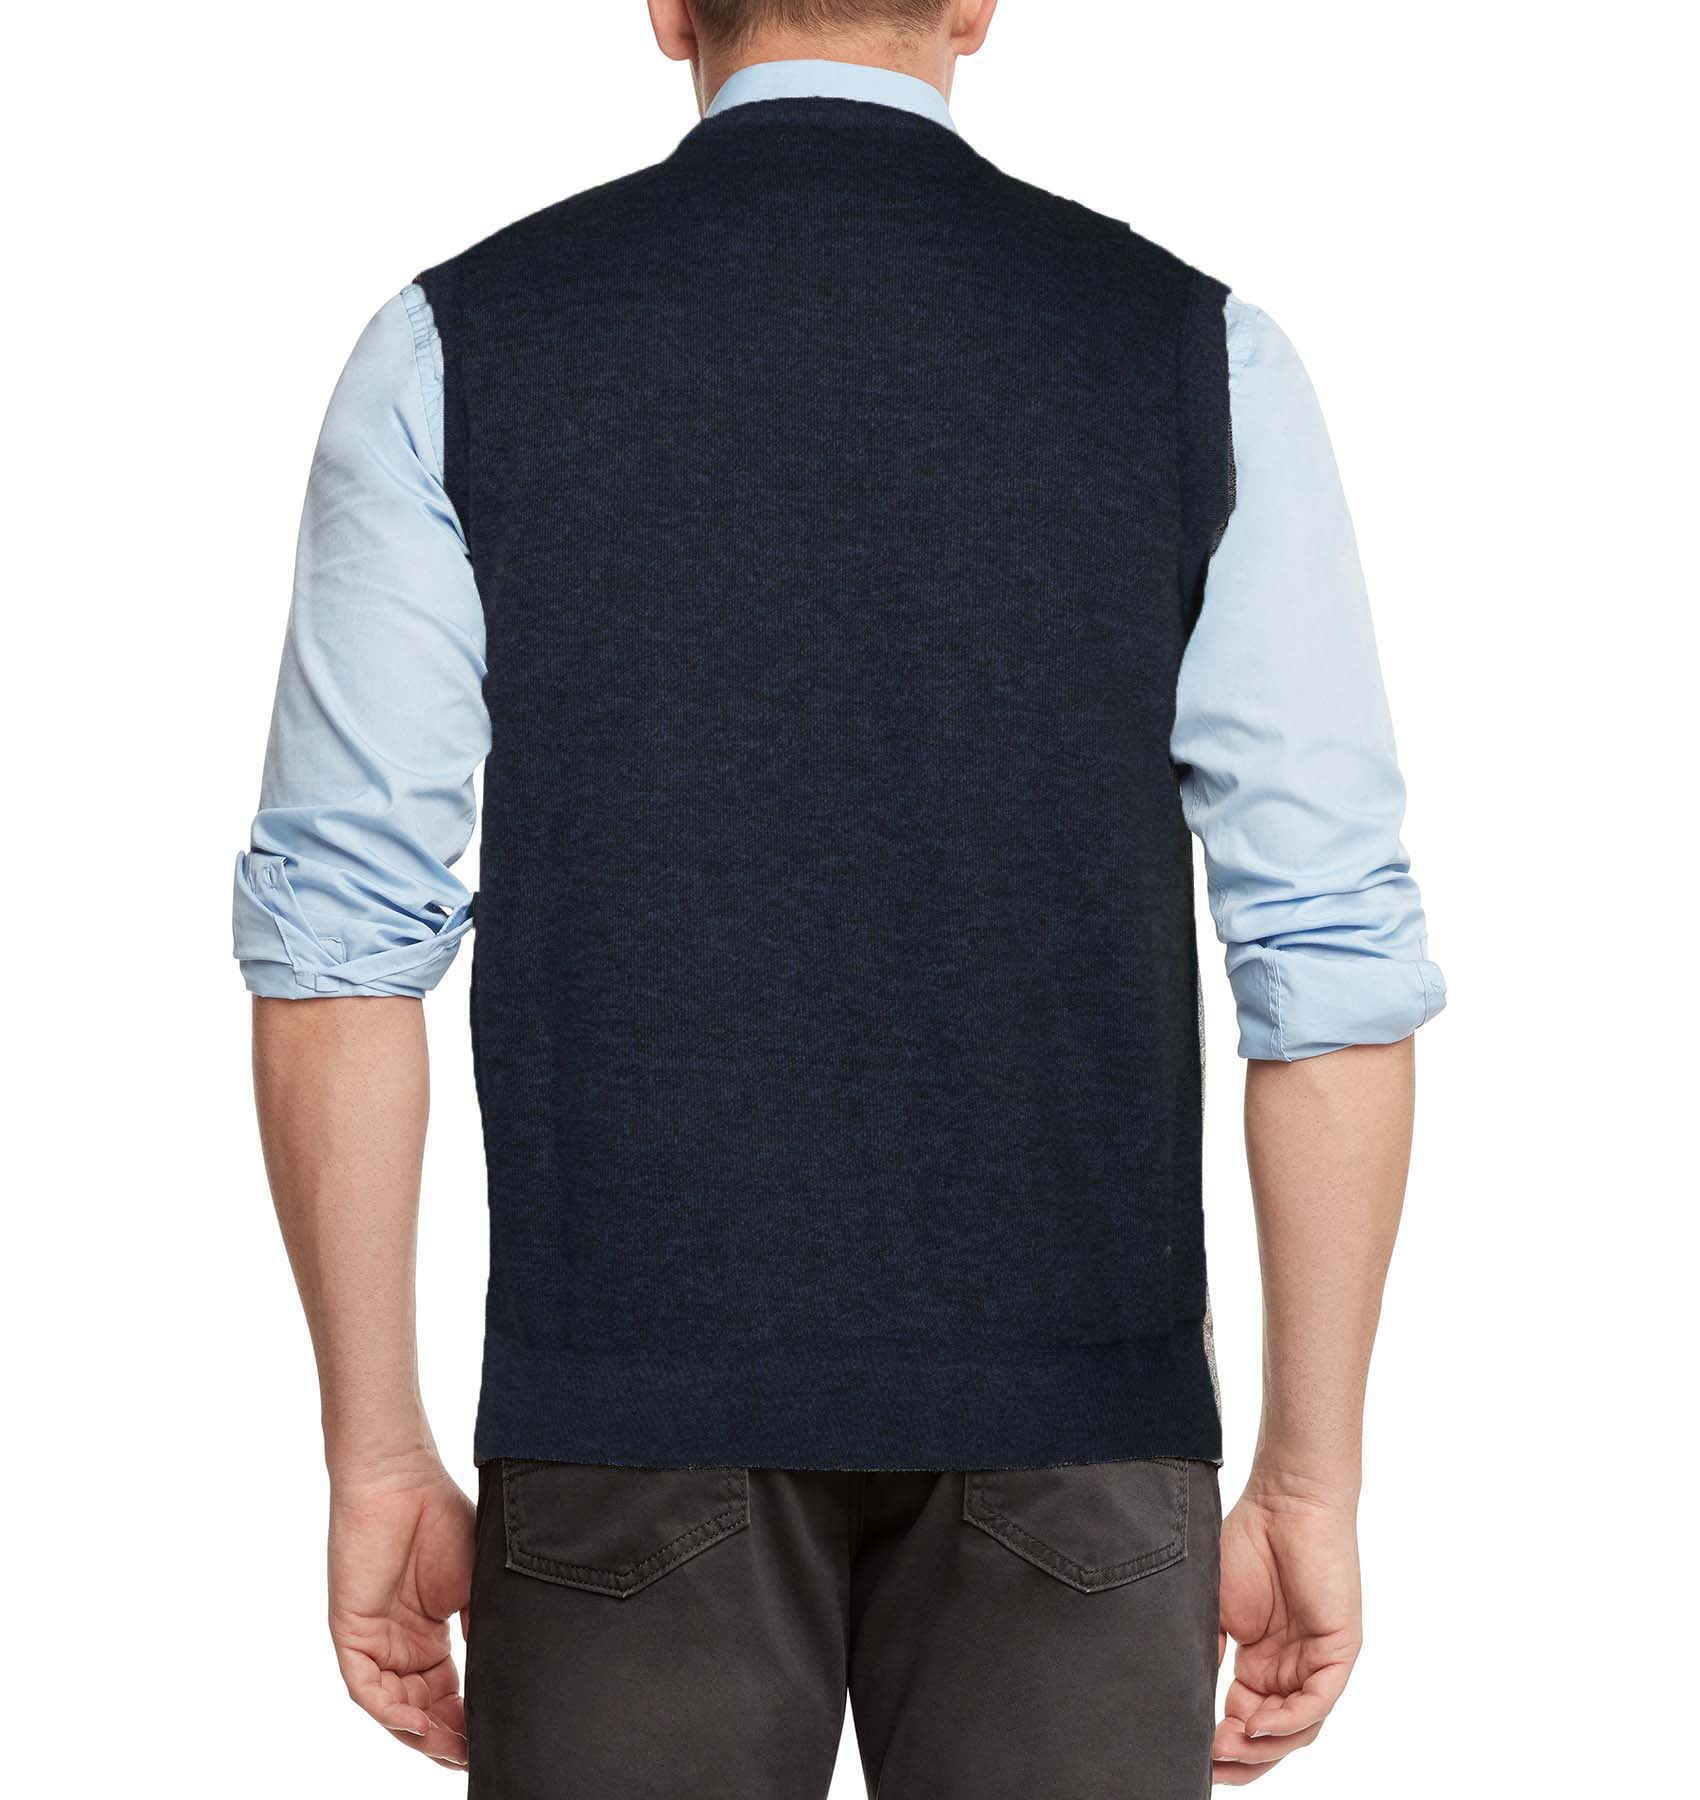 True Rock Men's Argyle V-Neck Sweater Vest (Navy/Tan/Blue, X